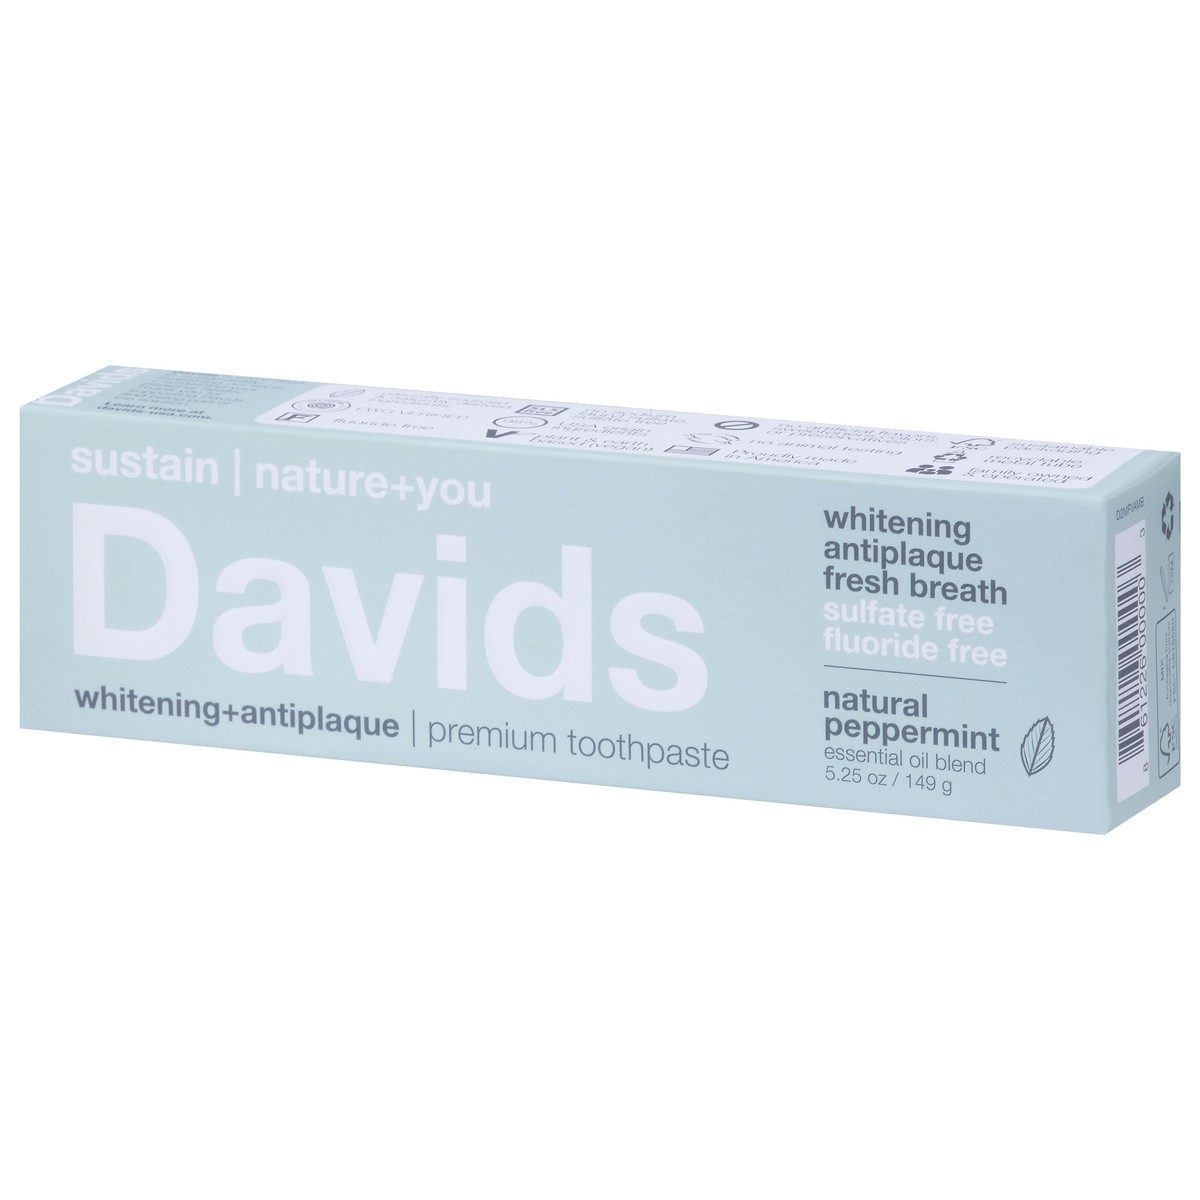 slide 9 of 9, David's Antiplaque Whitening Premium Natural Peppermint Toothpaste 5.25 oz, 5.25 oz